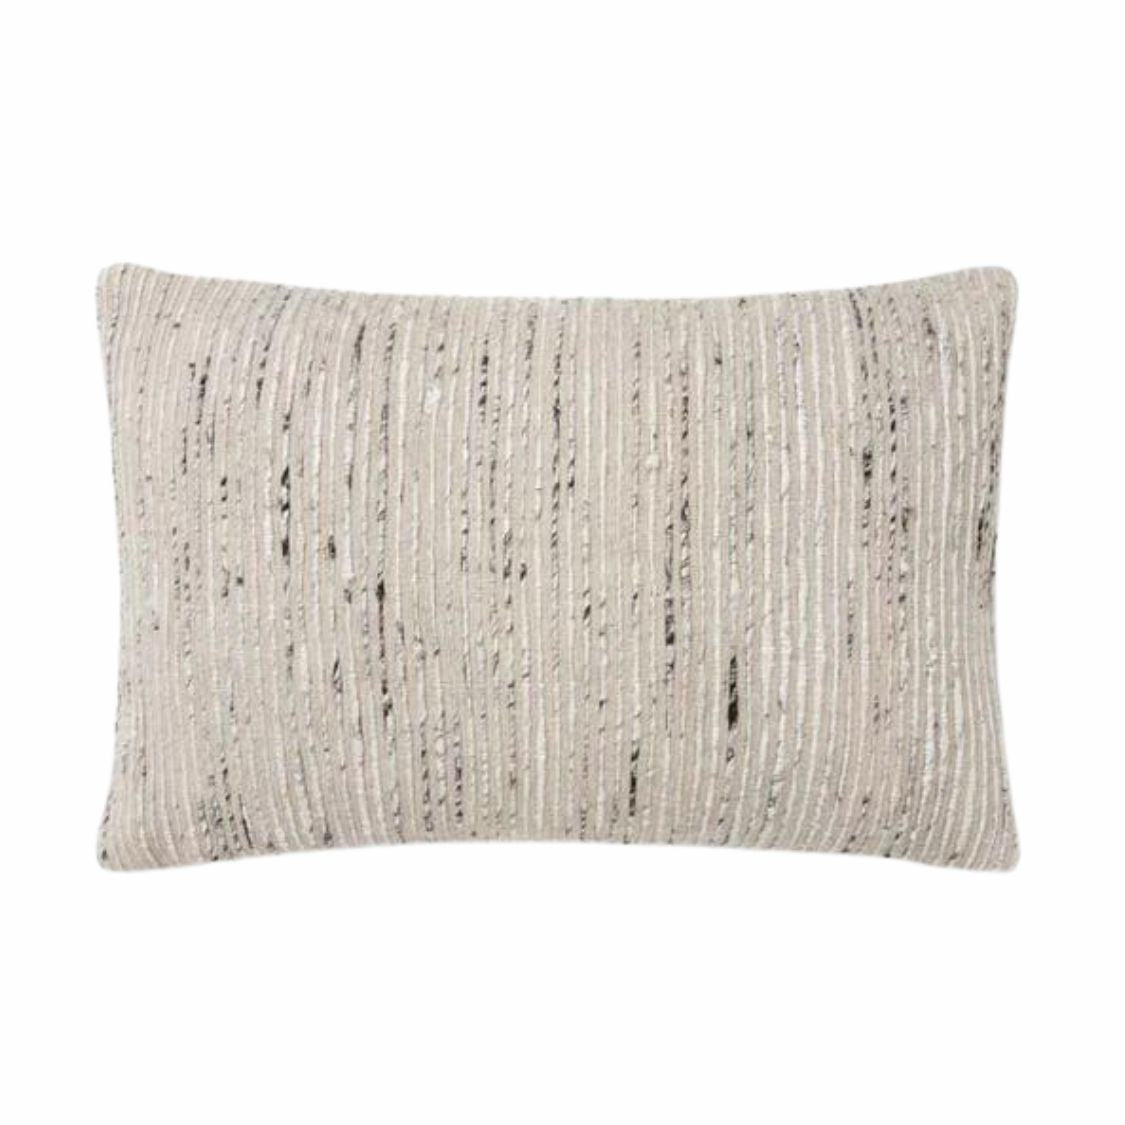 Woodside Pillow